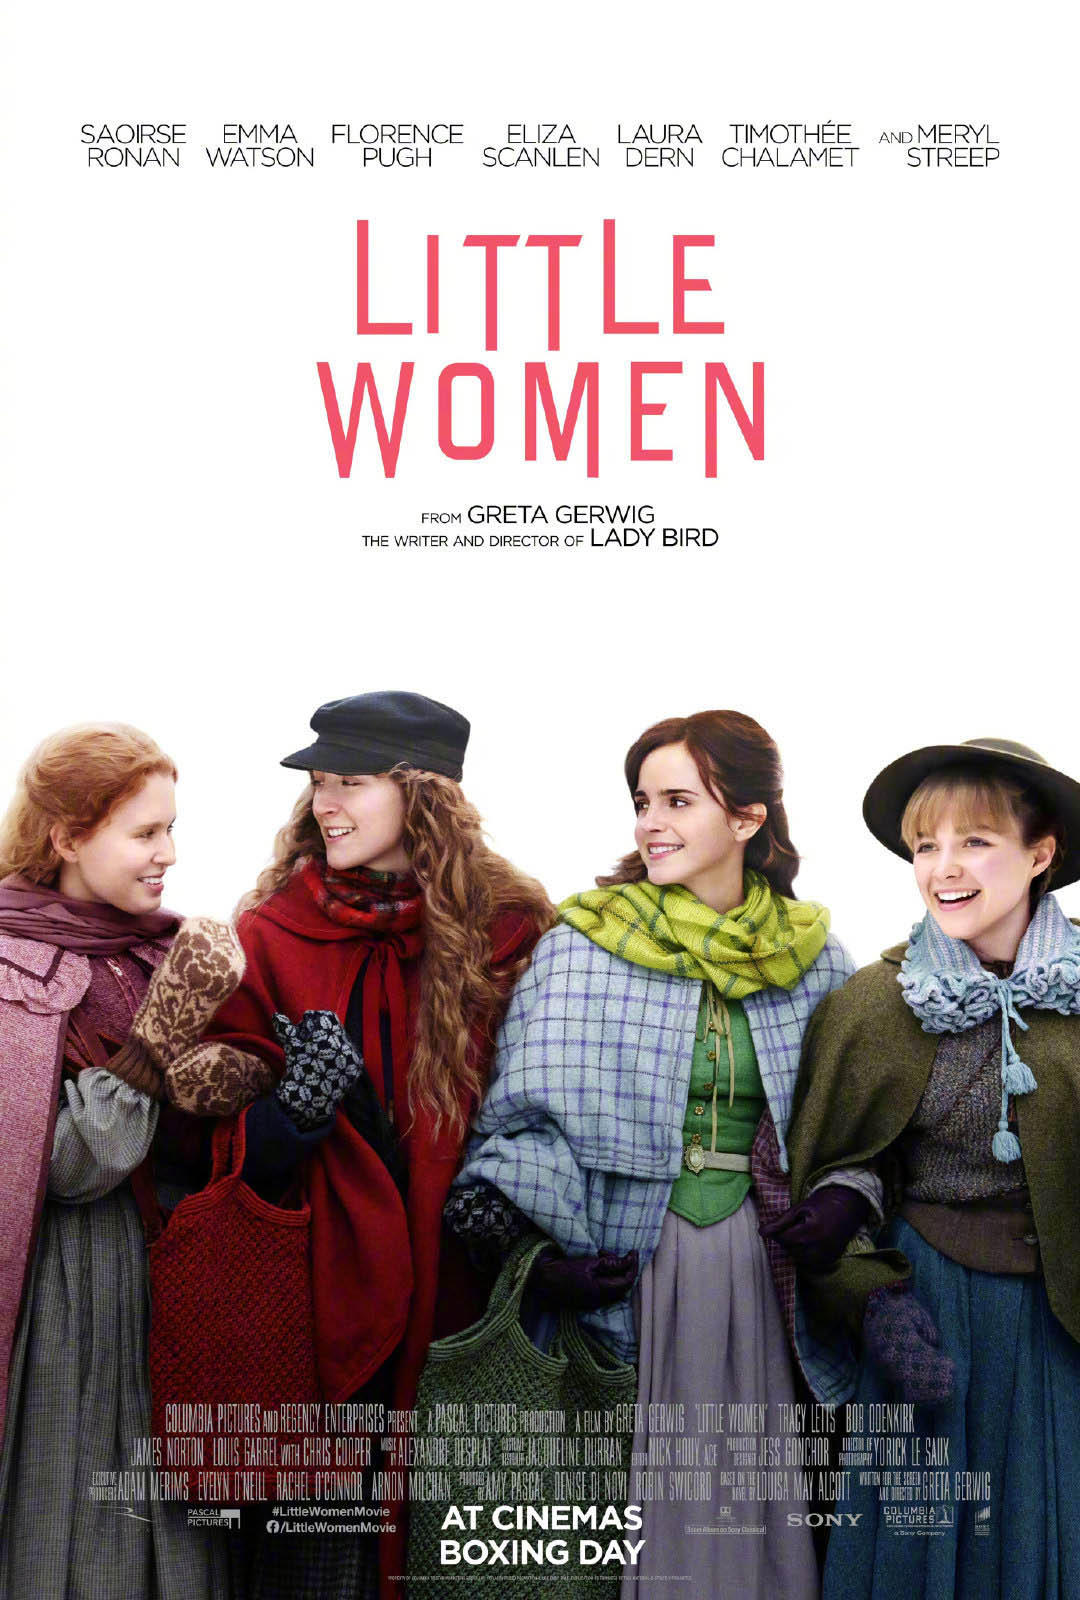 Little Women (2019) Official Full Movie Free Online